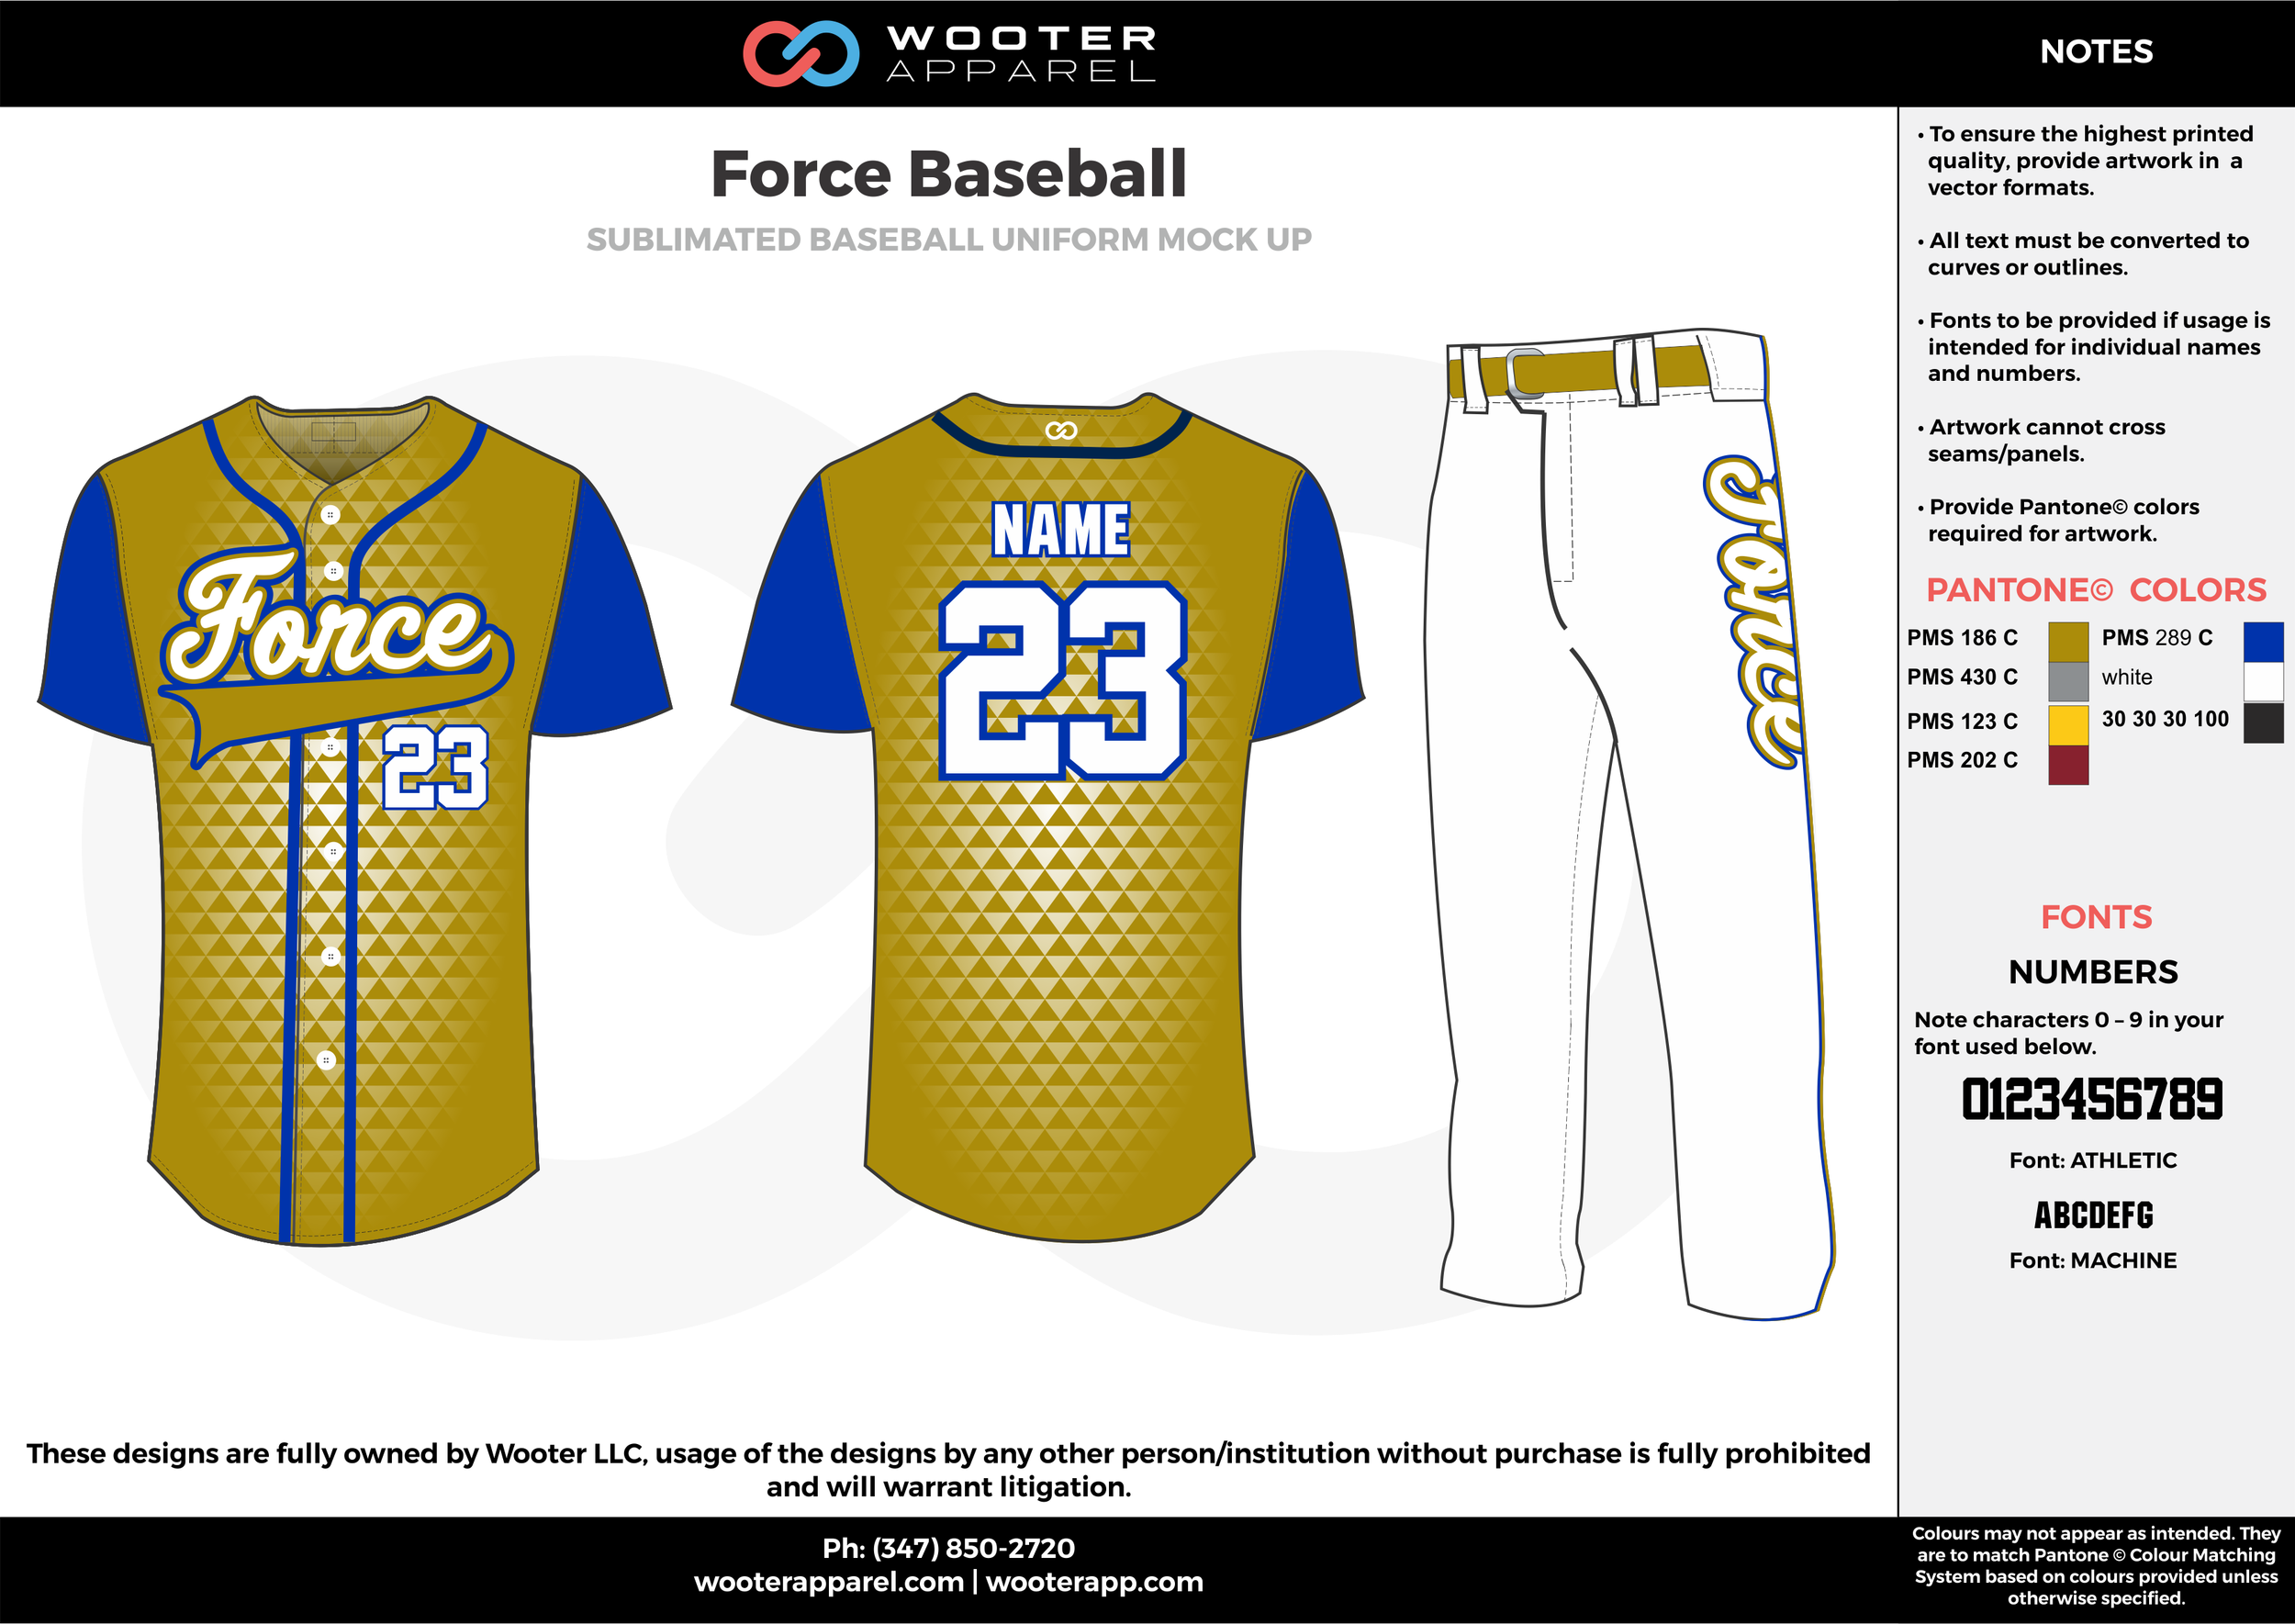 Houston Astros MLB Stitch Baseball Jersey Shirt Design 5 Custom Number And  Name Gift For Men And Women Fans - Freedomdesign